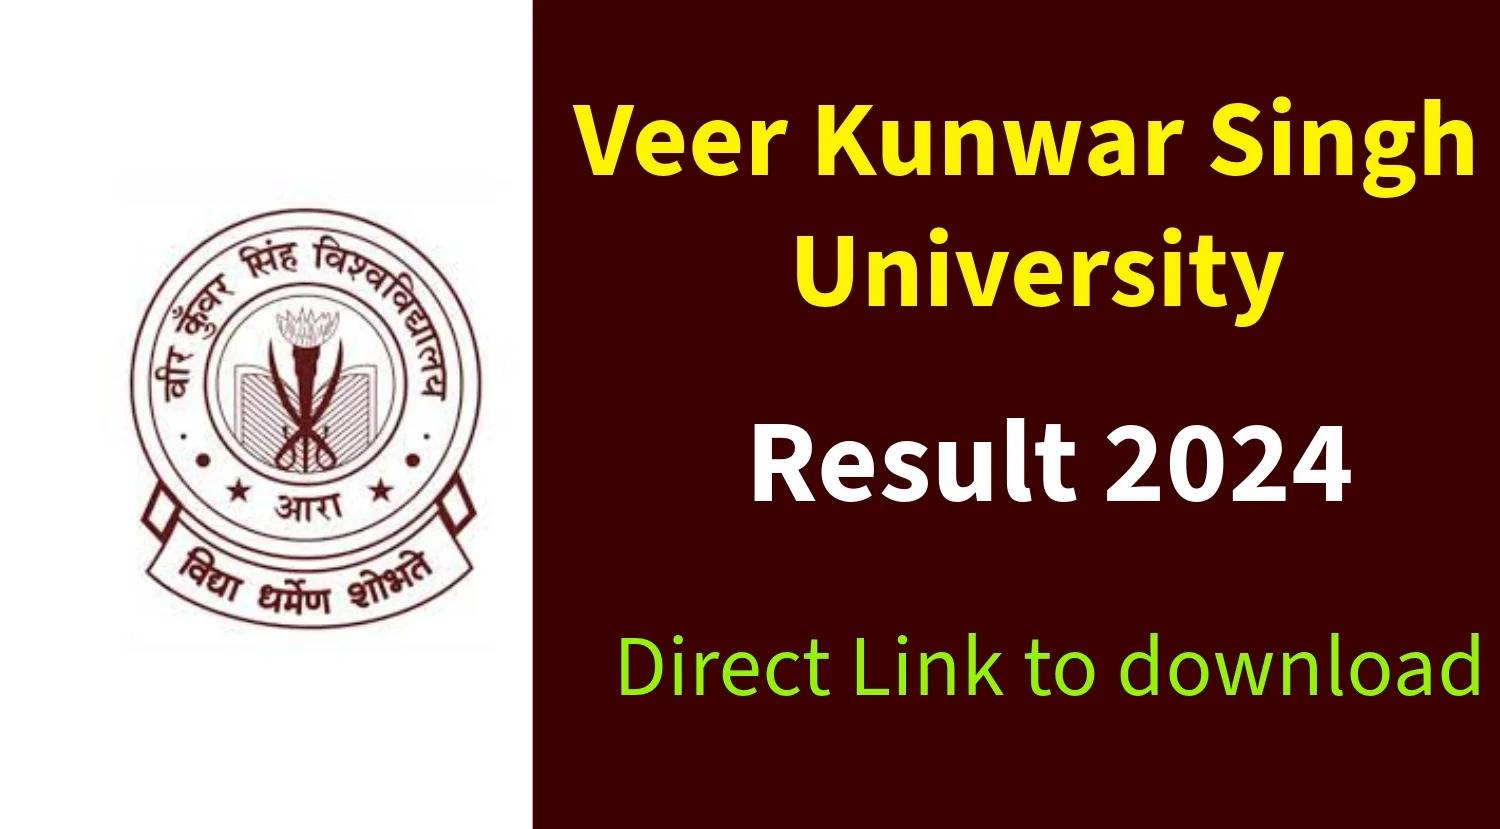 VKSU Declares 2024 Results: UG Marksheet Available for Download at vksu.ac.in